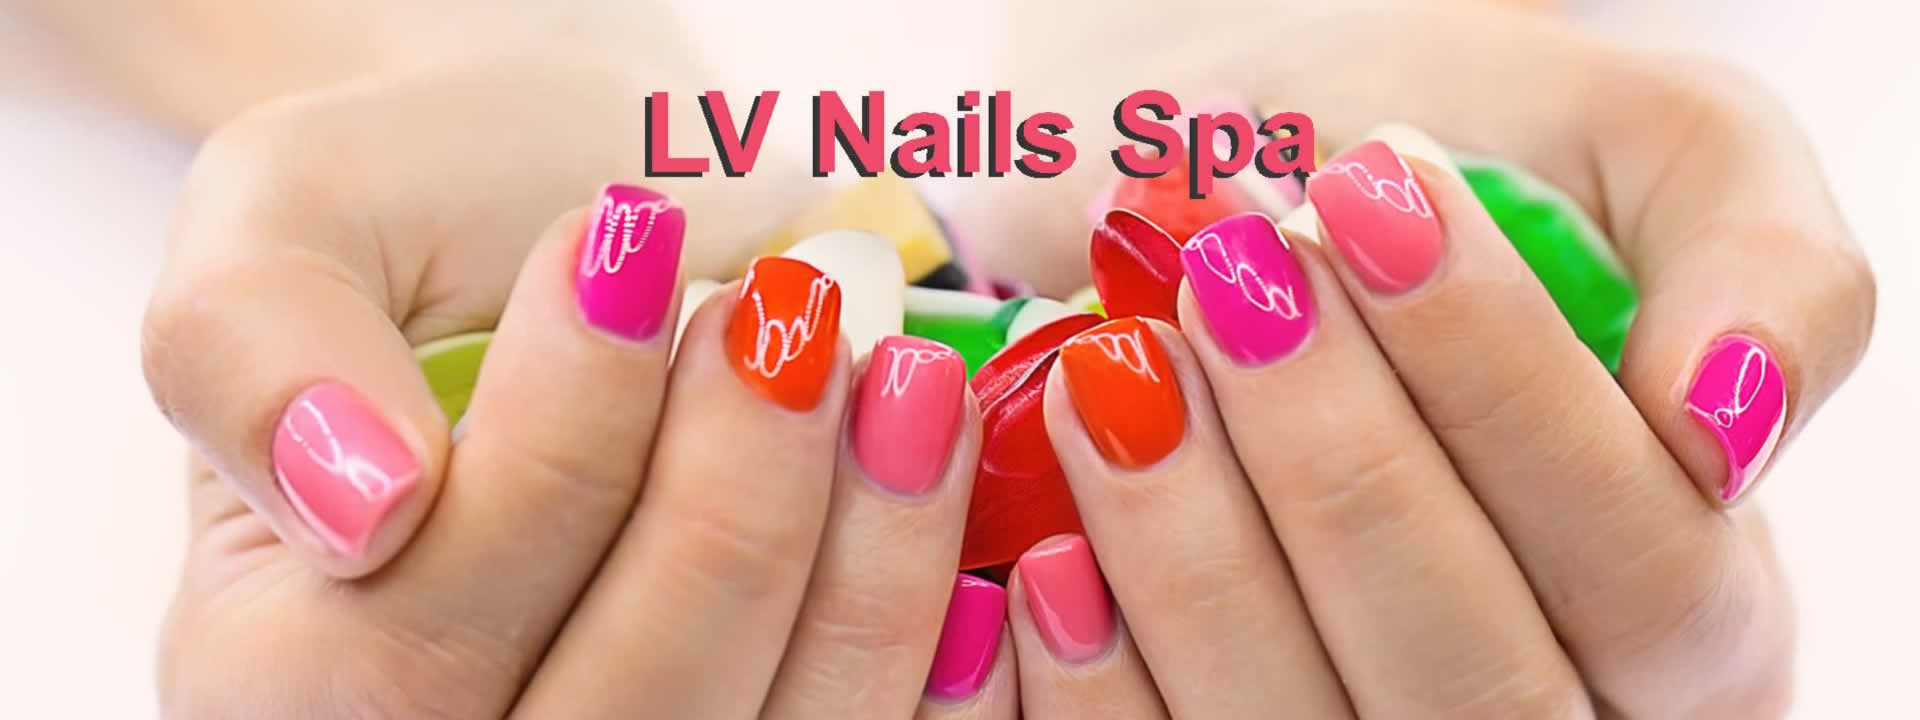 Contact LV Nails Texas Missouri City